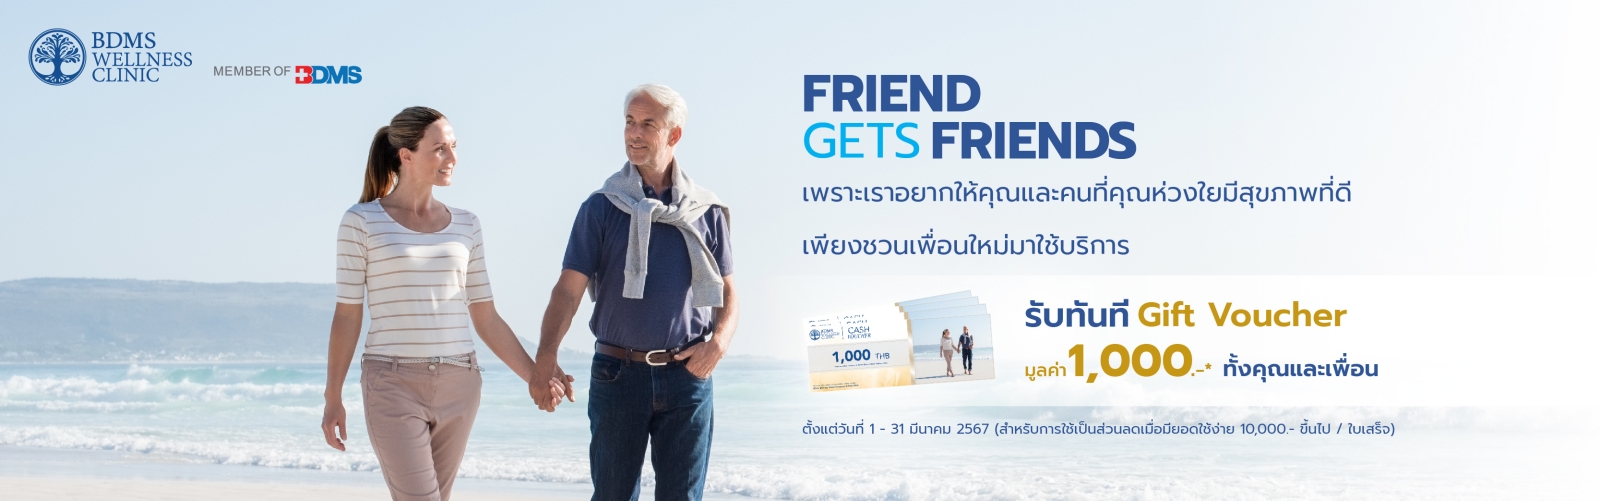 Friend Gets Friends - รับคูปองเงินสด 1,000 บาท*